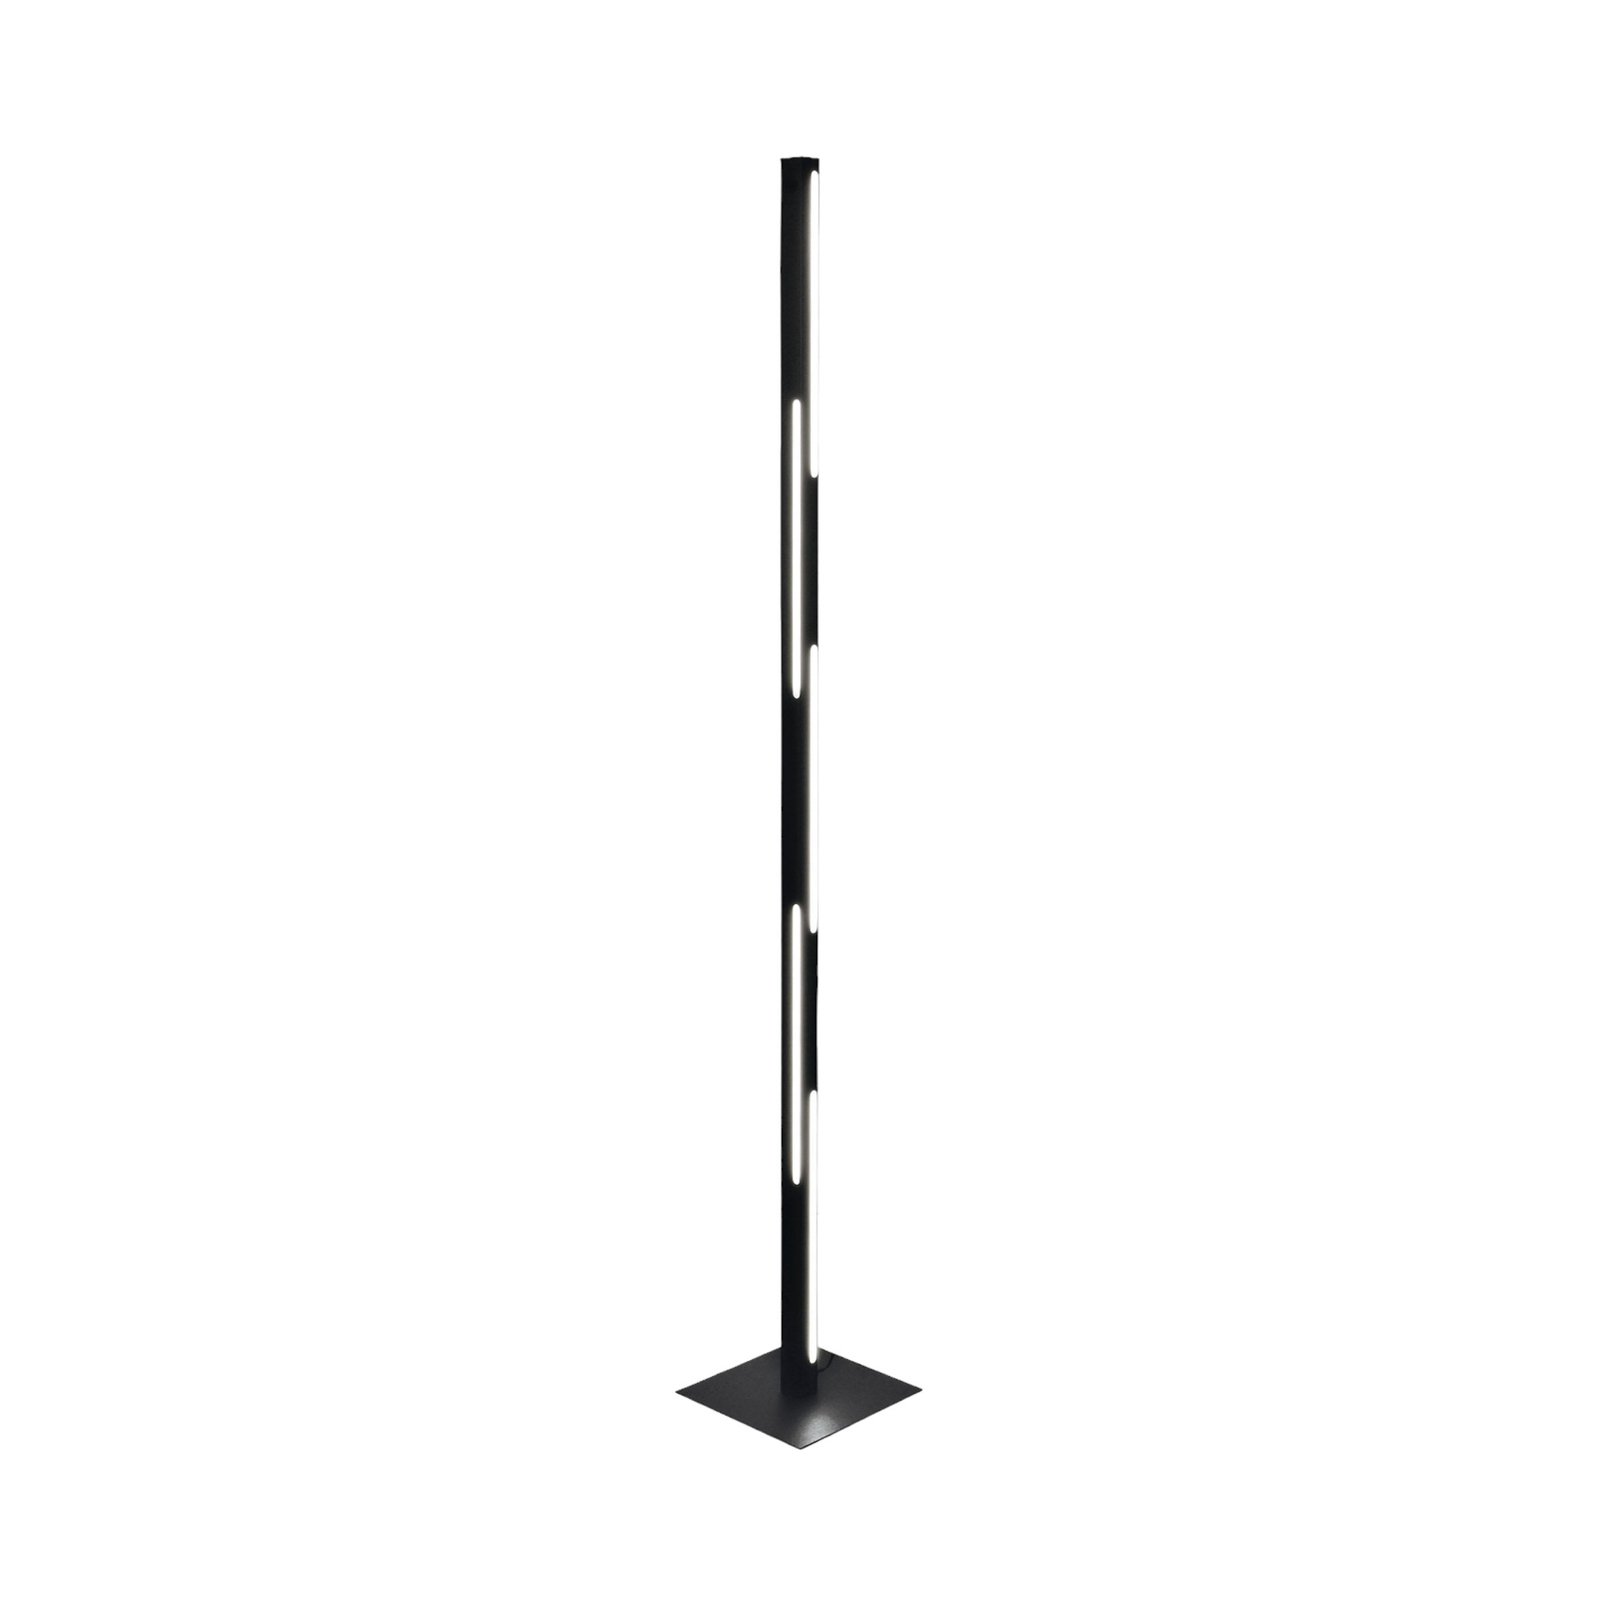 LED-golvlampa Ling, svart, höjd 165 cm, dimbar, metall